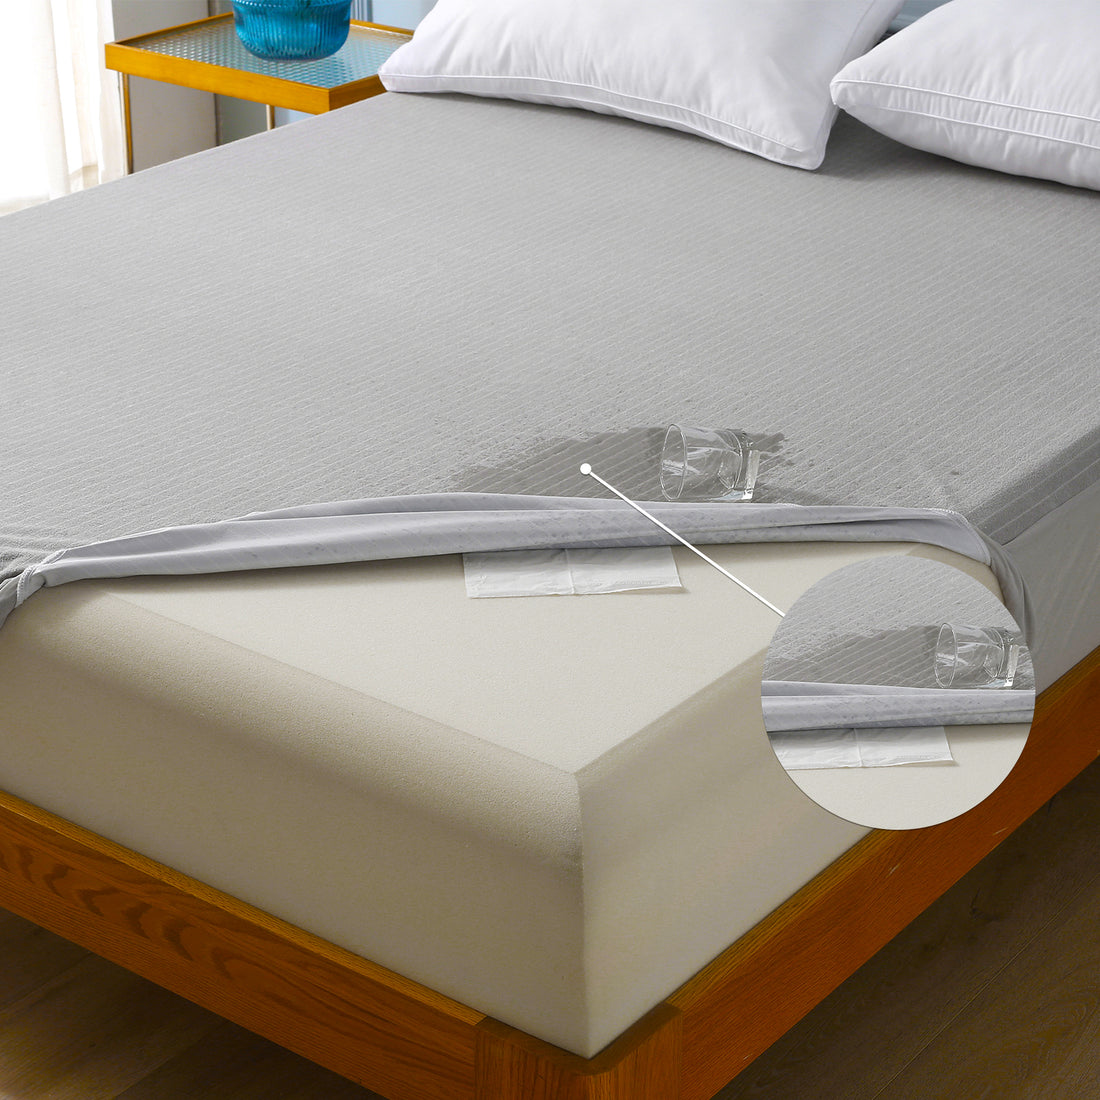 Bedspread purchase skills and precautions waterproof mattress protector